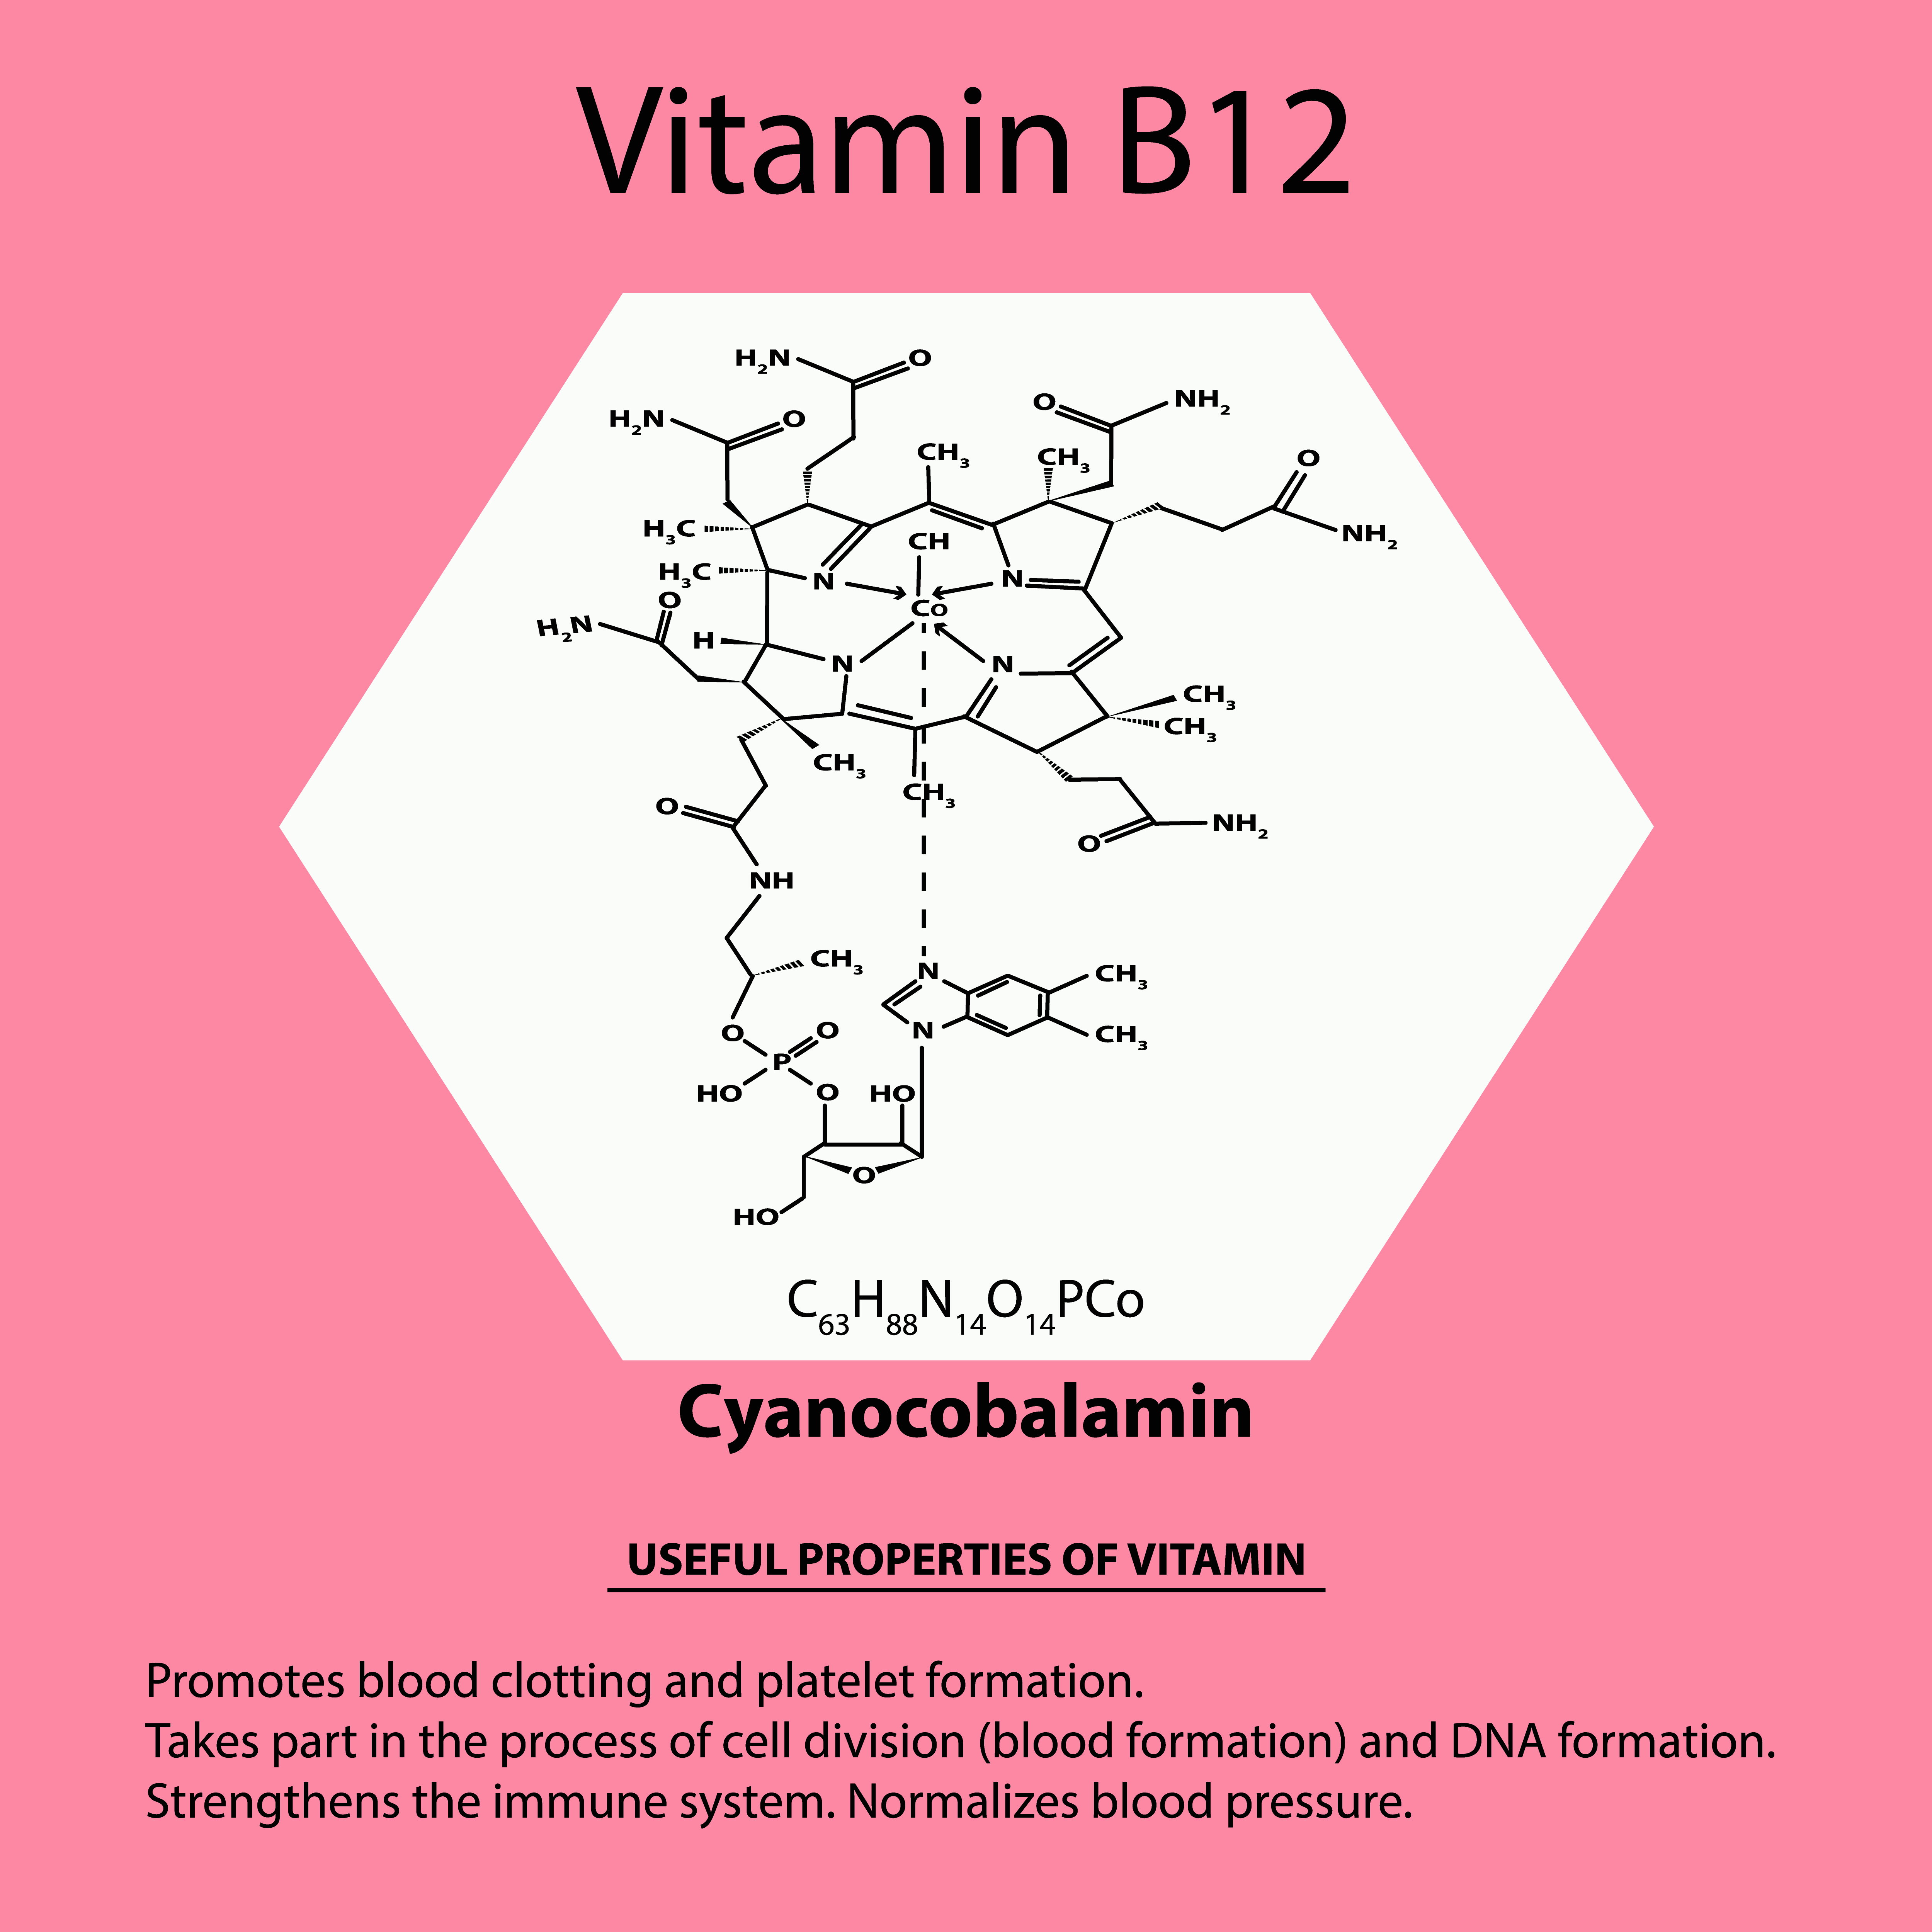 Cyanocobalamin - chemical formula and usages